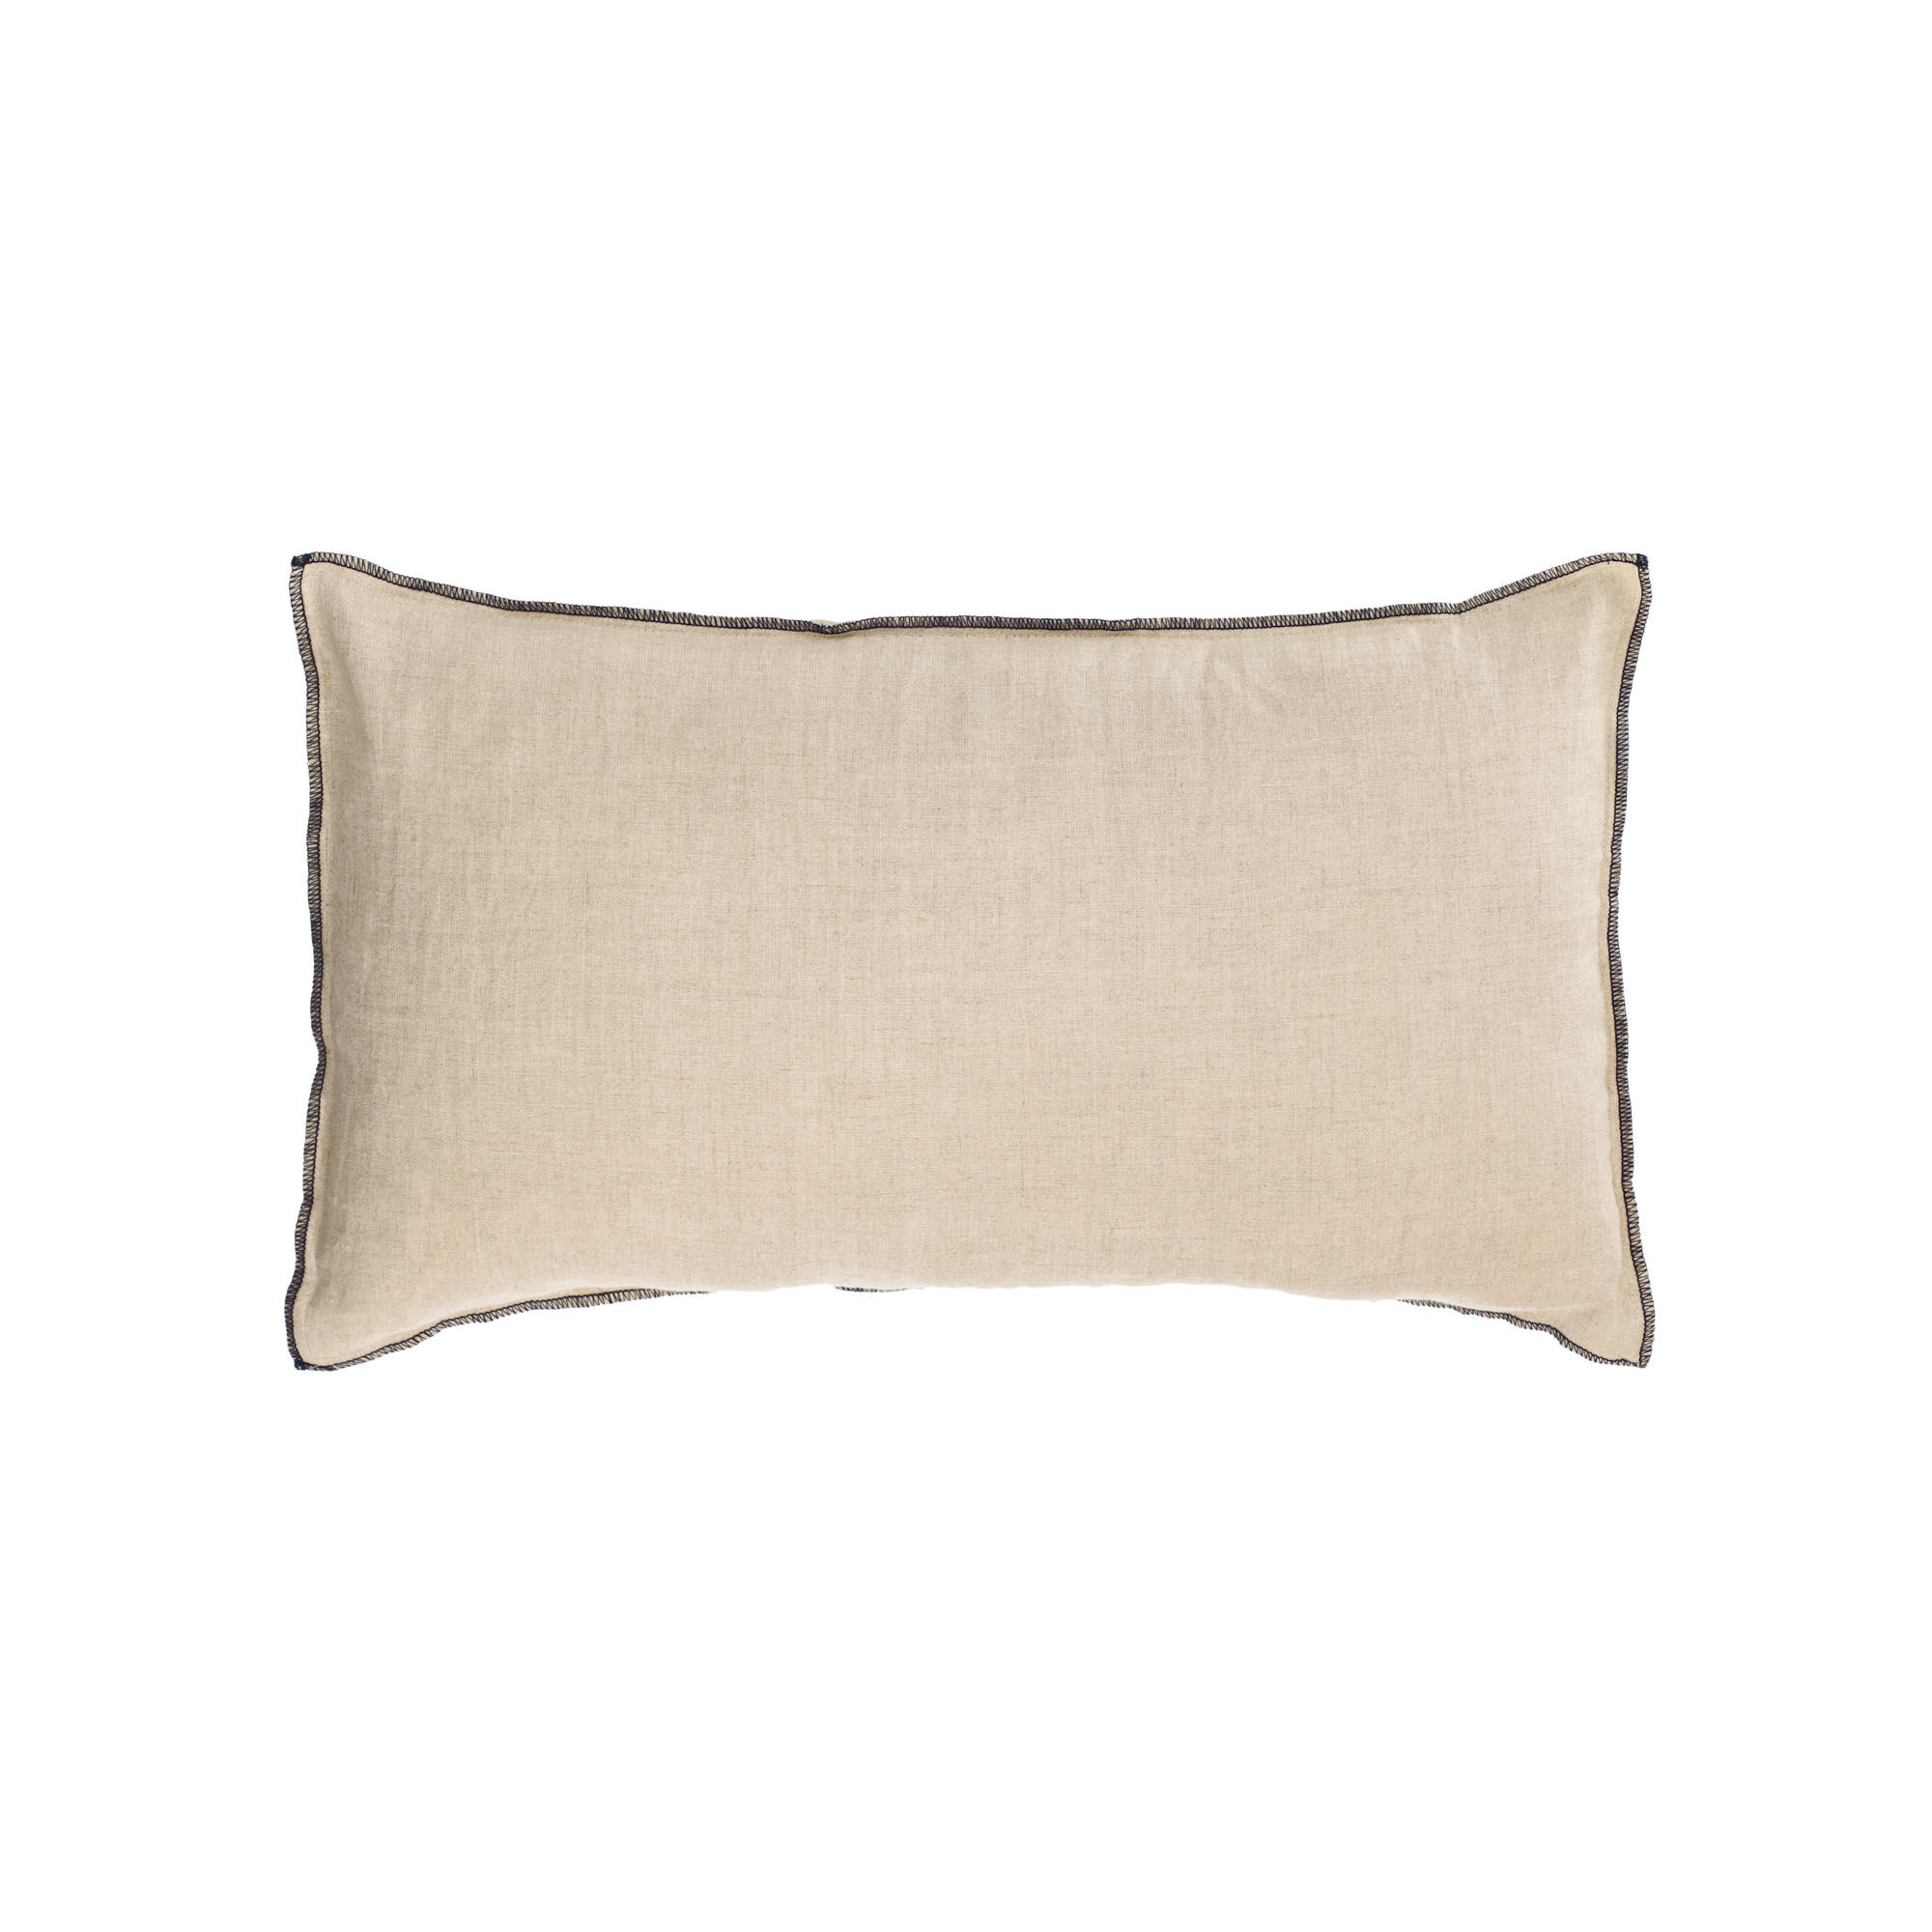 Kave Home Elea 100% linen cushion cover in beige colour 30 x 50 cm